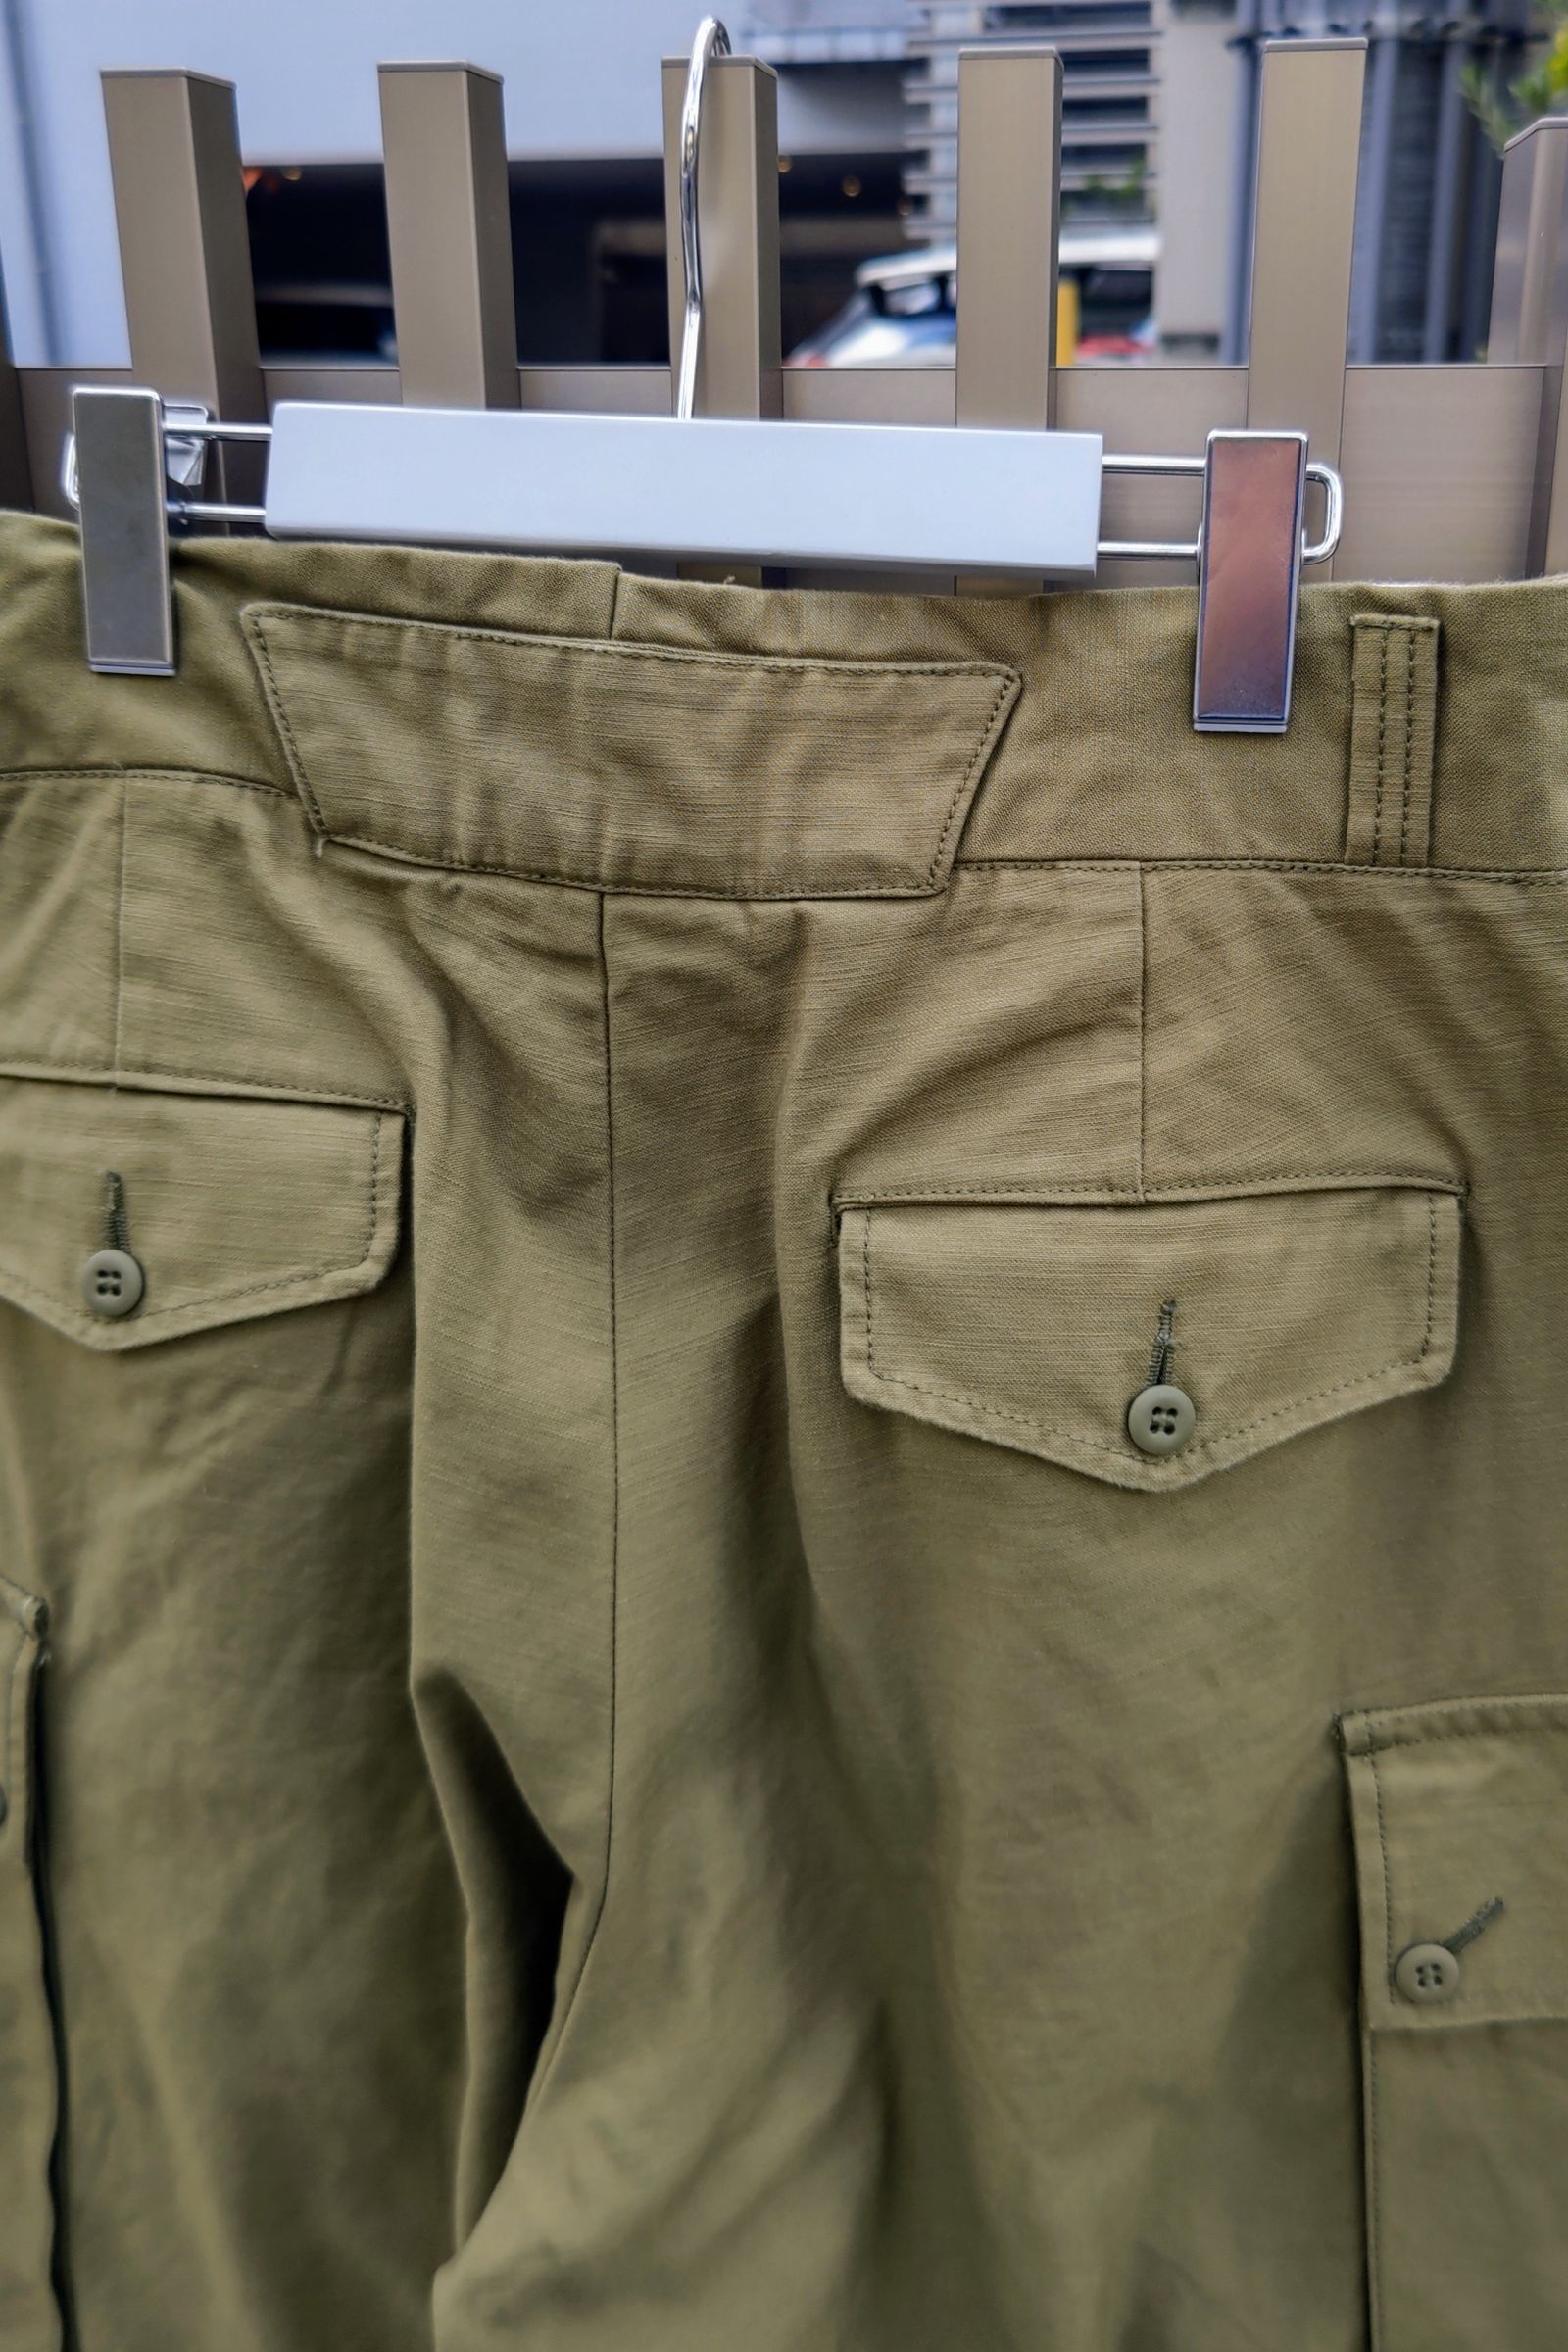 A.PRESSE - mt trooper pants -olive- 22aw 9月17日発売 | asterisk